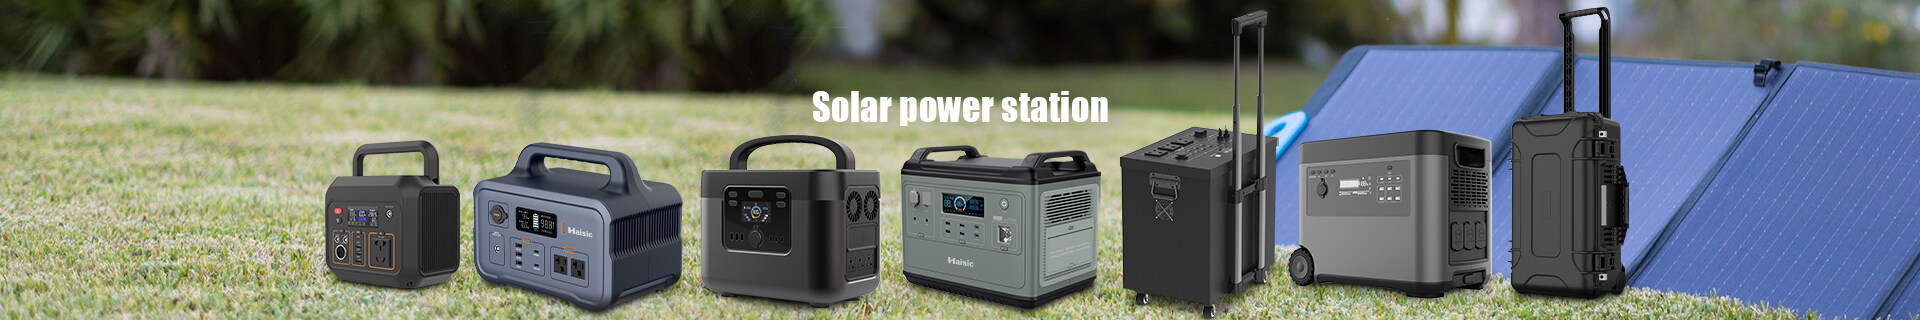 2000w portable power station,solar power station,2000w solar generator